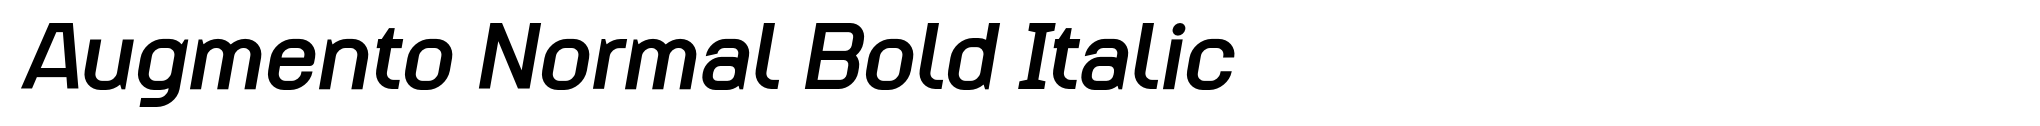 Augmento Normal Bold Italic image